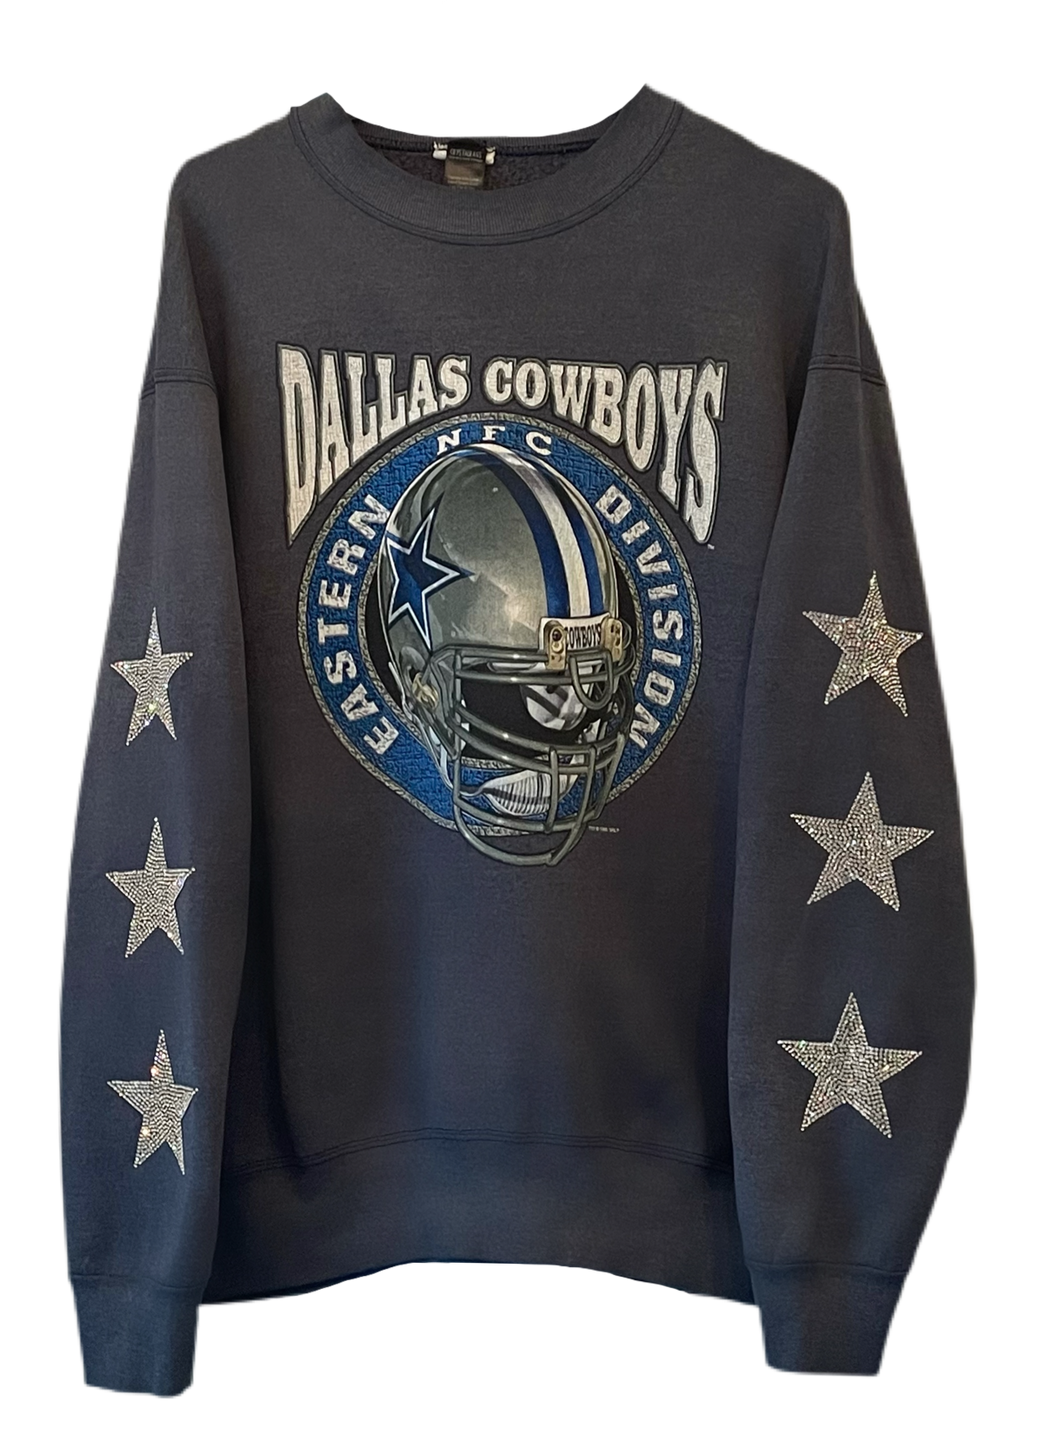 Dallas Cowboys, NFL One of a KIND Vintage Swear shirt with Three Crystal Star Design